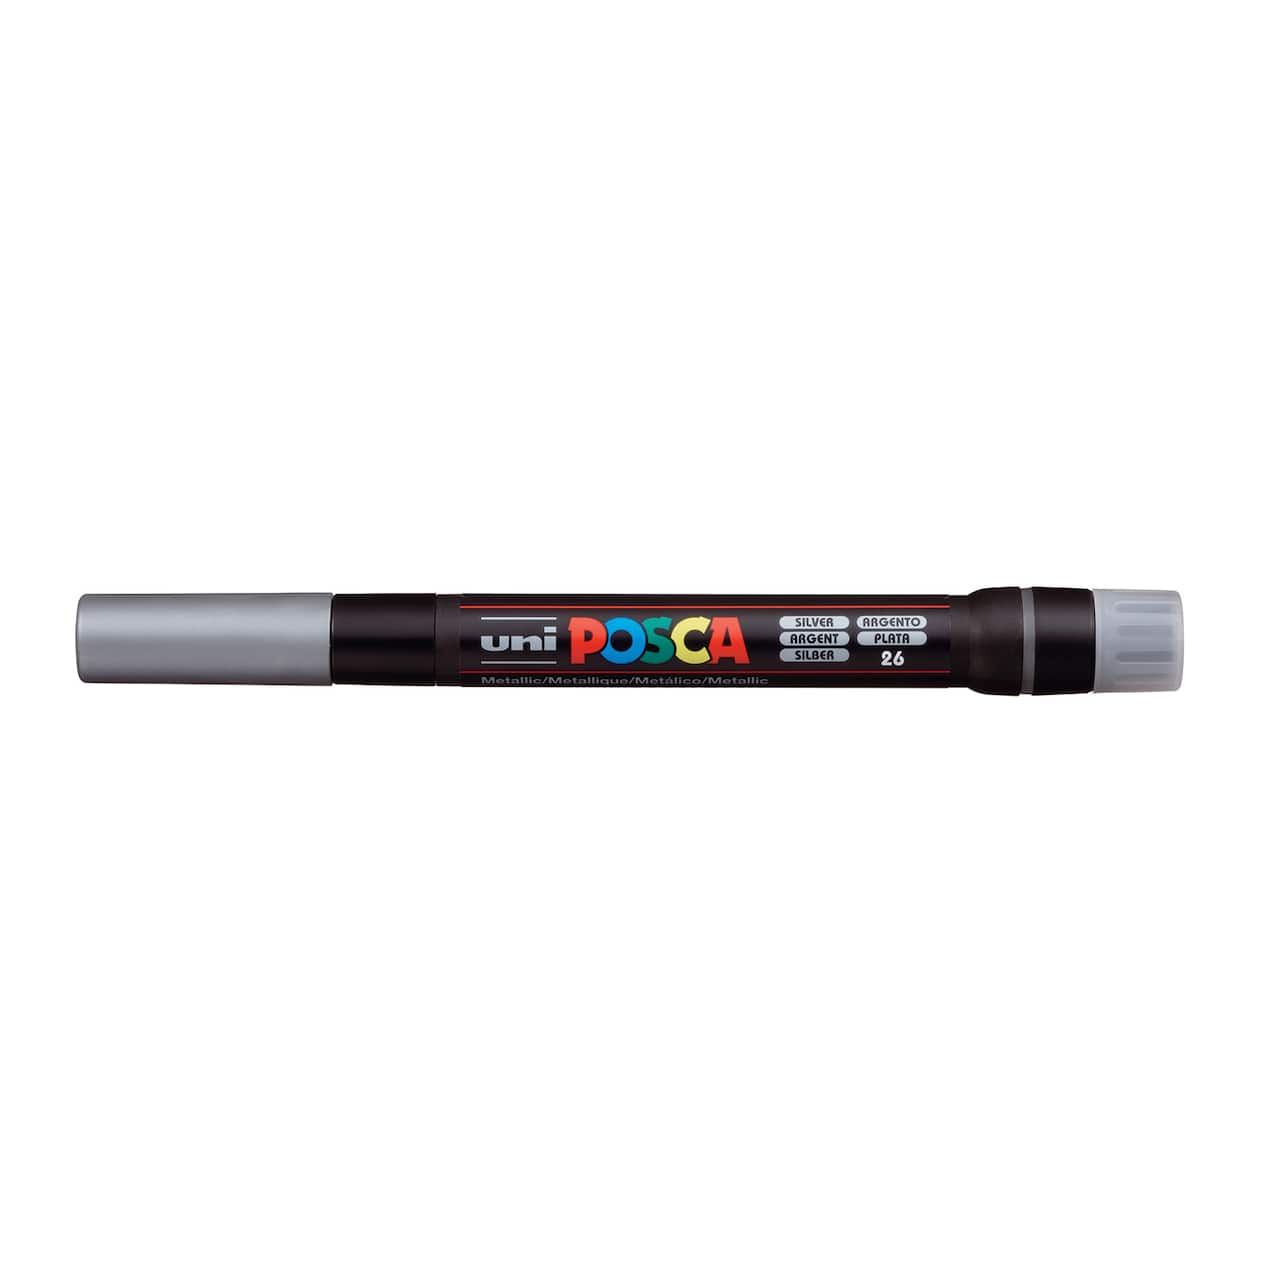 Uni POSCA PCF-350 Brush Tip Paint Marker